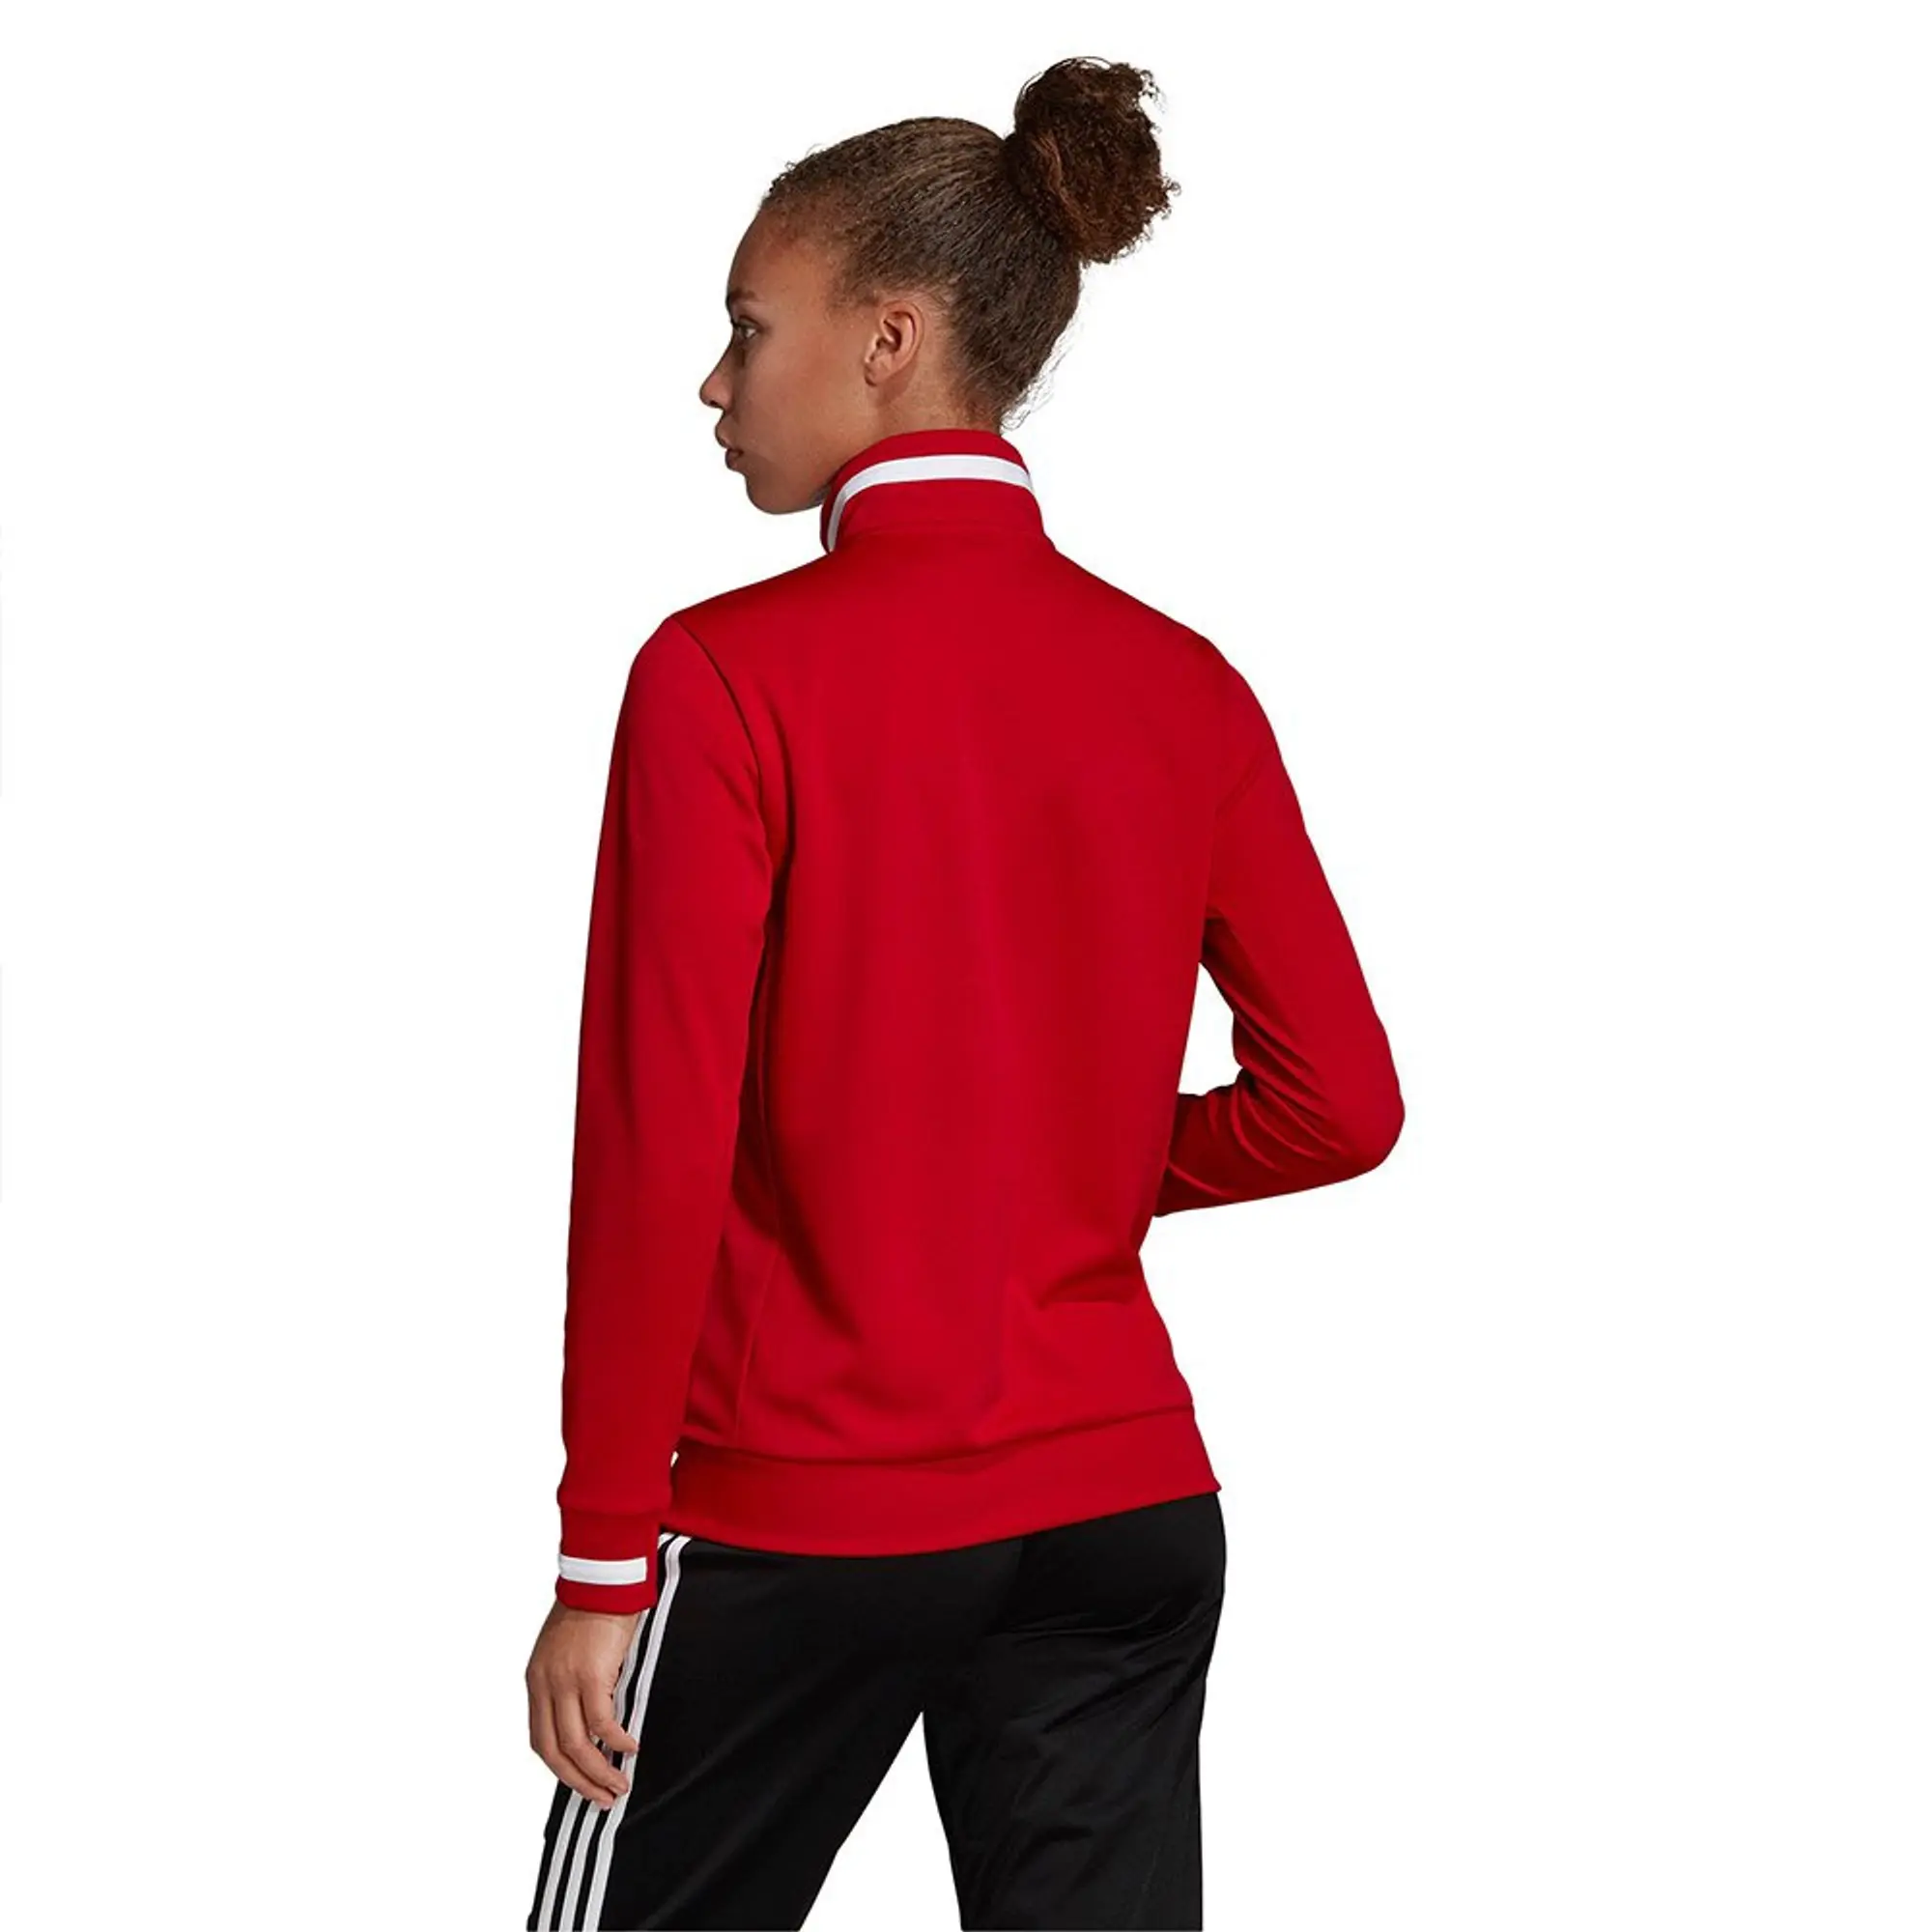 Adidas Badminton Team 19 Track Full Zip Sweatshirt  - Red